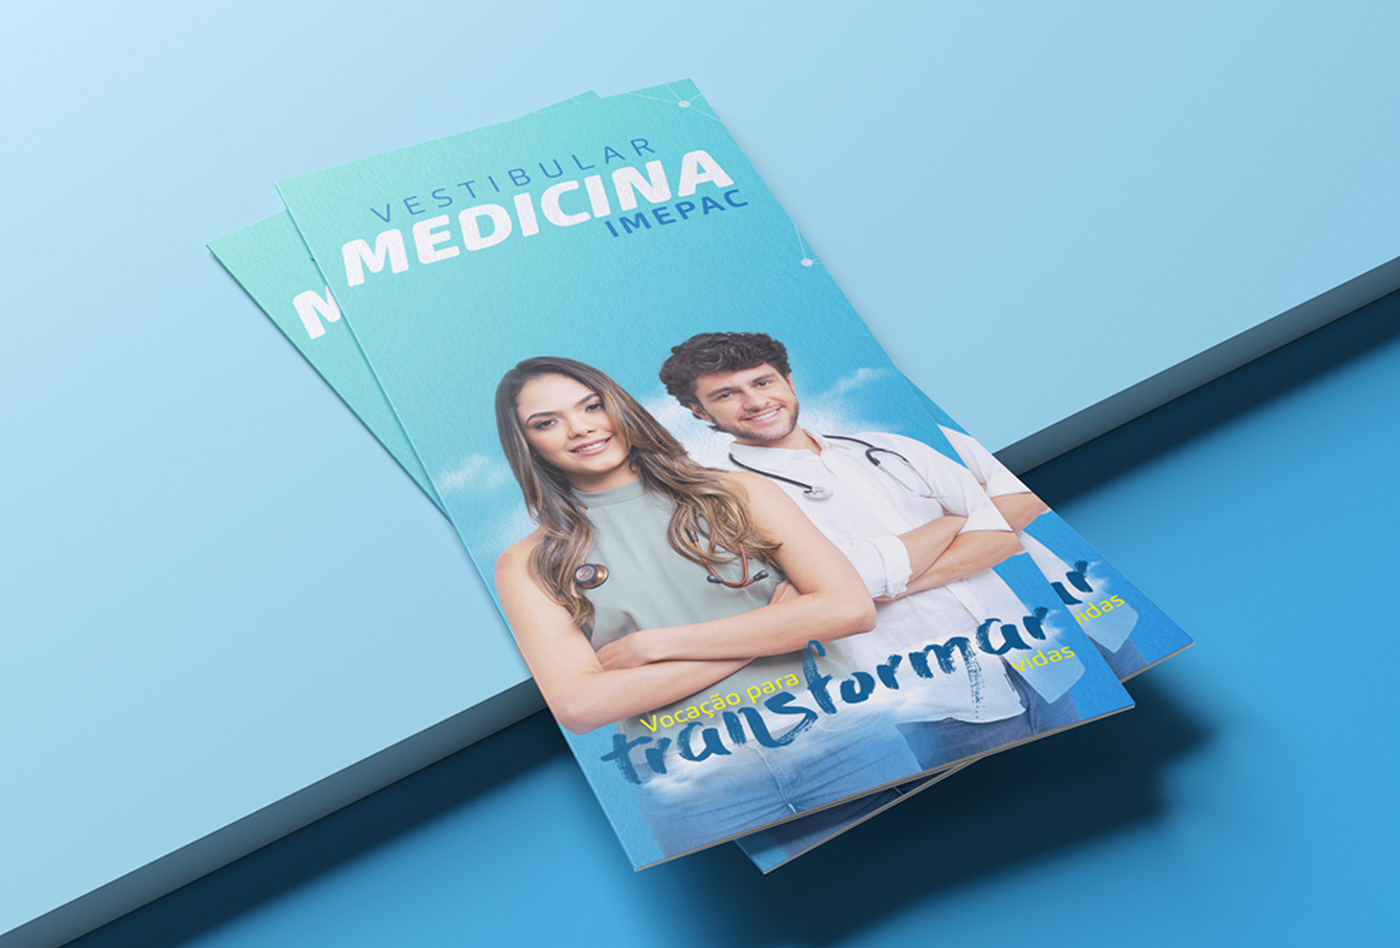 vestibular University revista magazine Direção de arte Students social media vestibular de medicina medicina